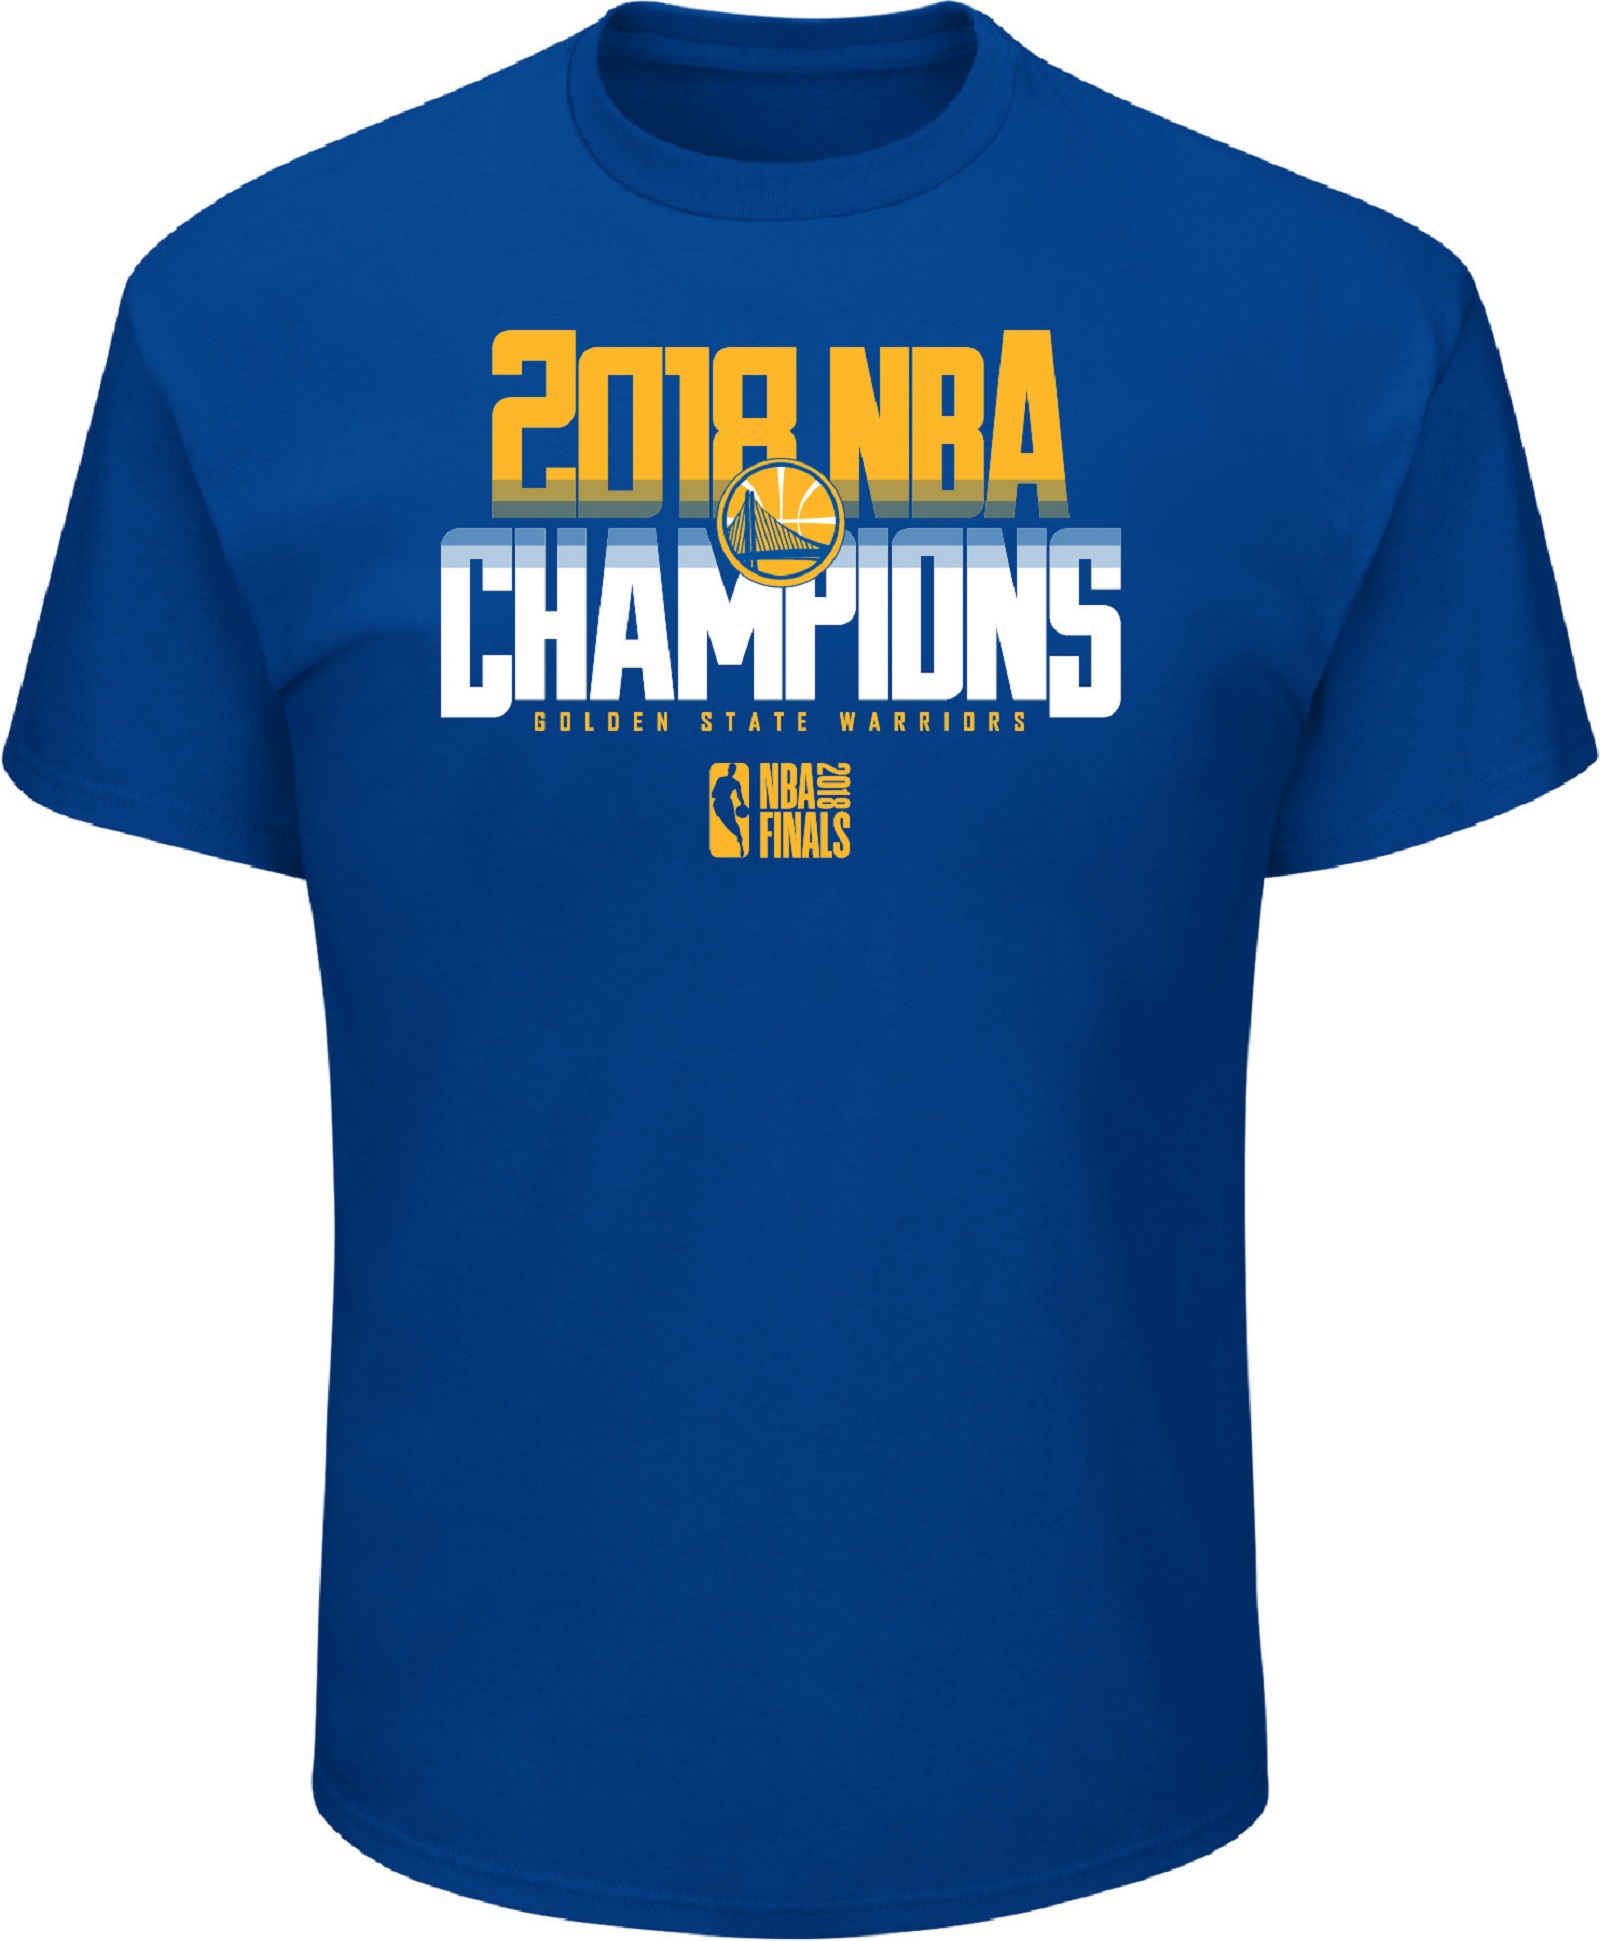 warriors 2018 championship t shirt